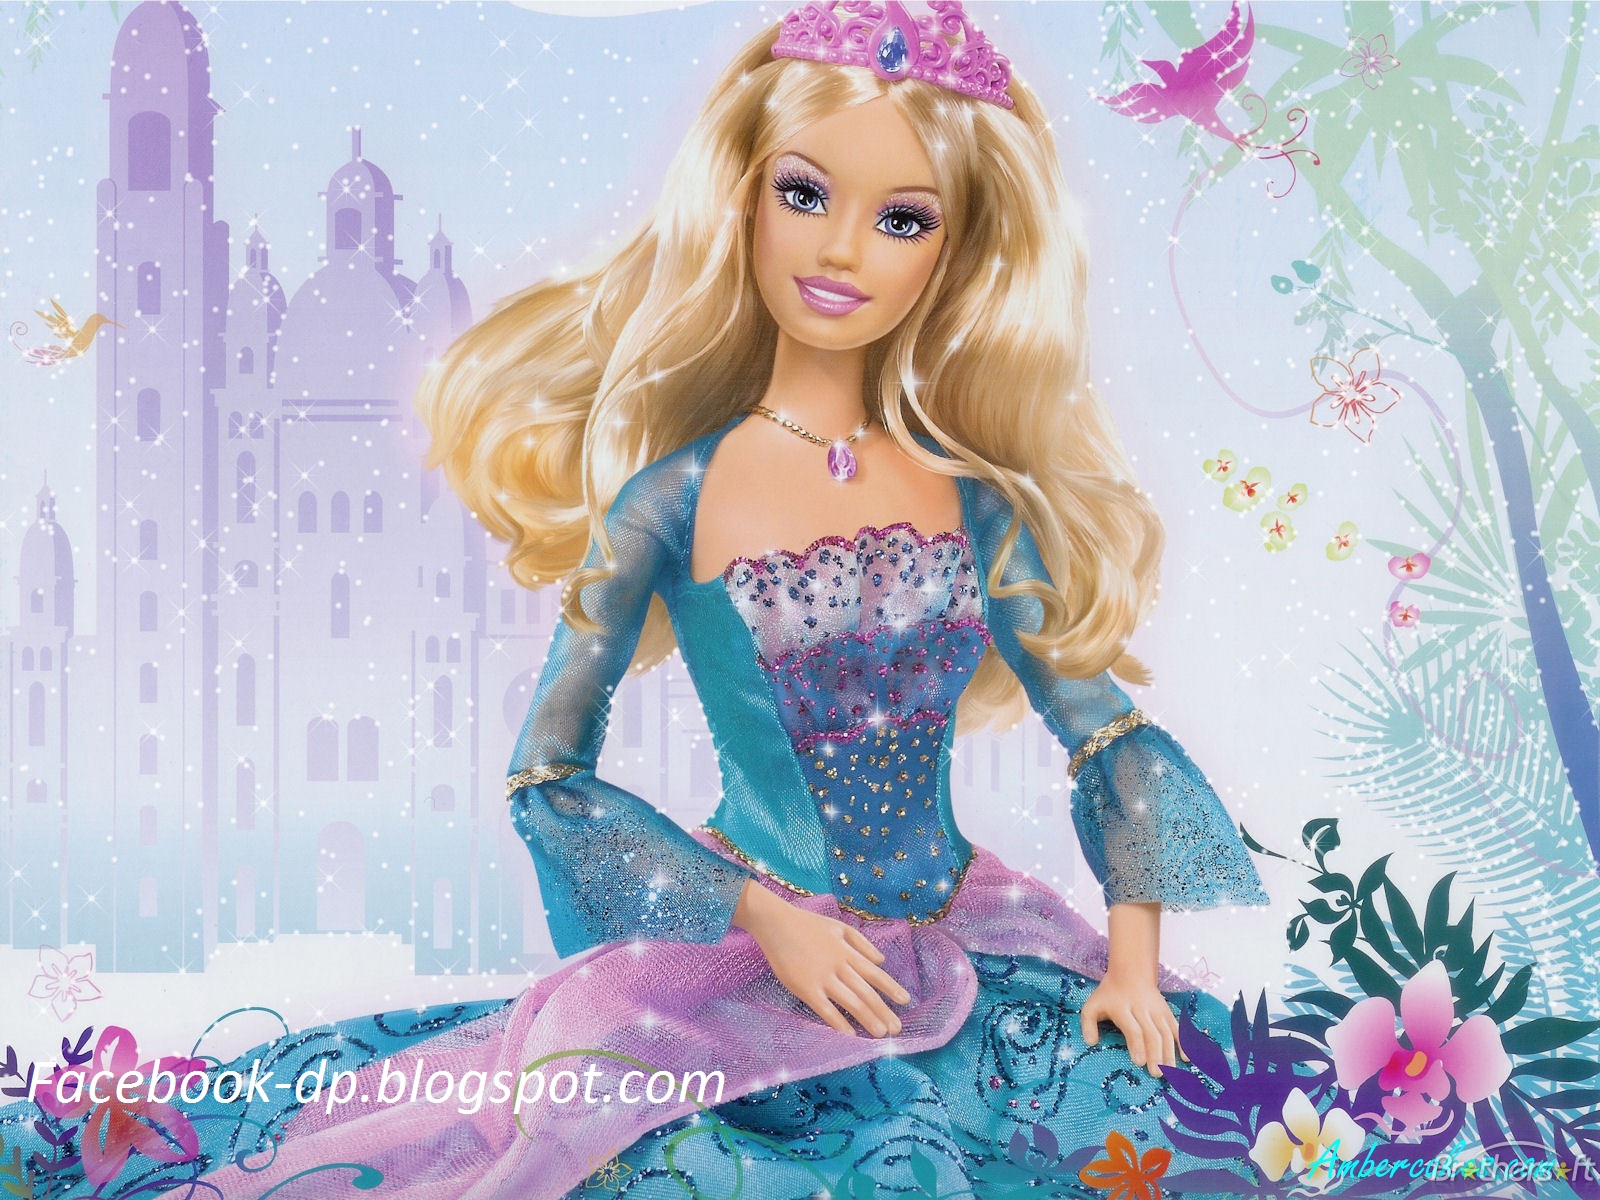 Facebook dp: Facebook barbie dolls-dp, free download fb display picture